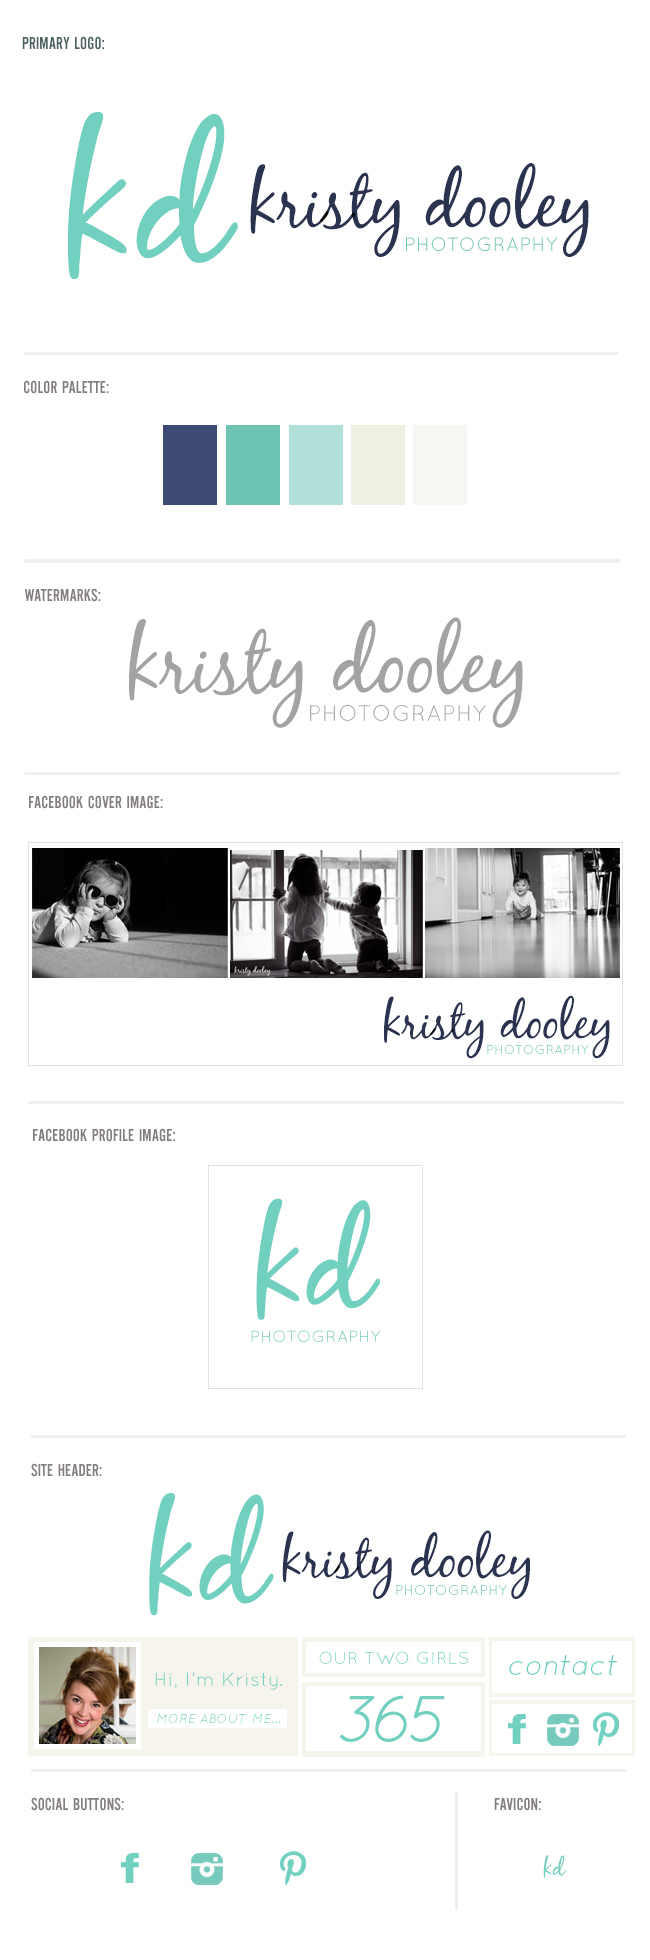 KD_Branding-Sheet